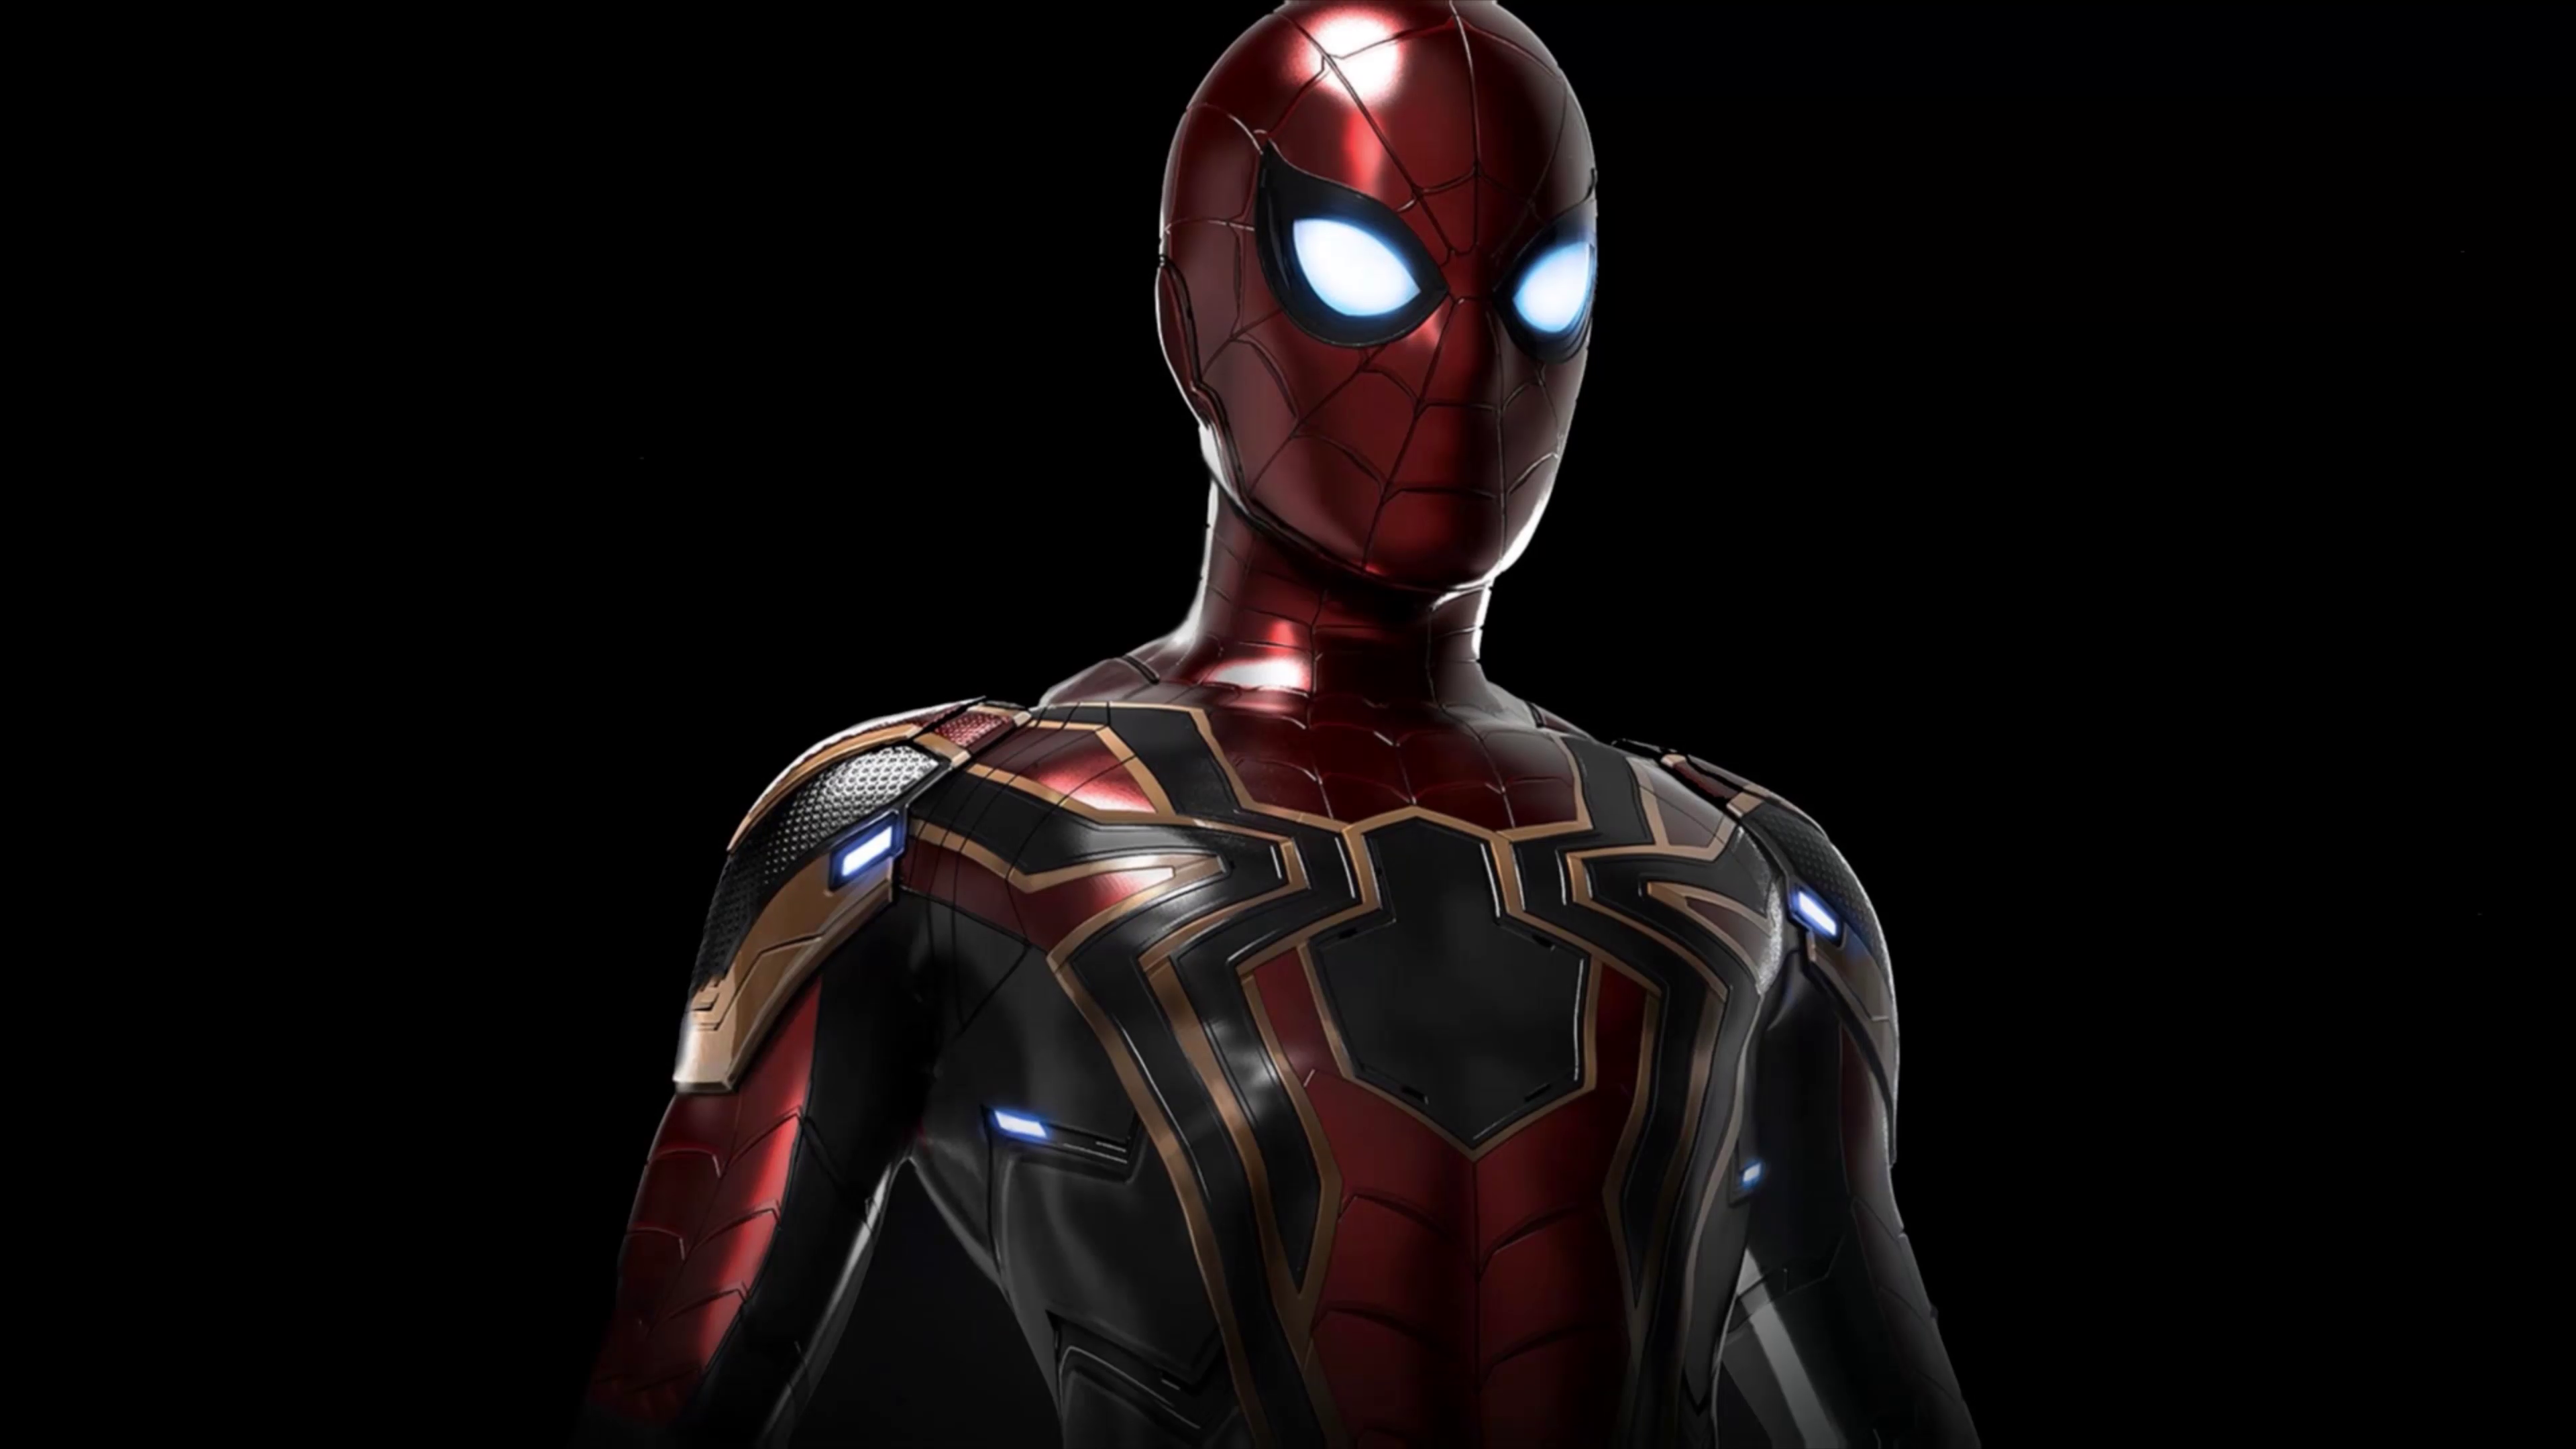 Spider Man Iron Spider Armor Avengers Infinity War Live Wallpaper ...